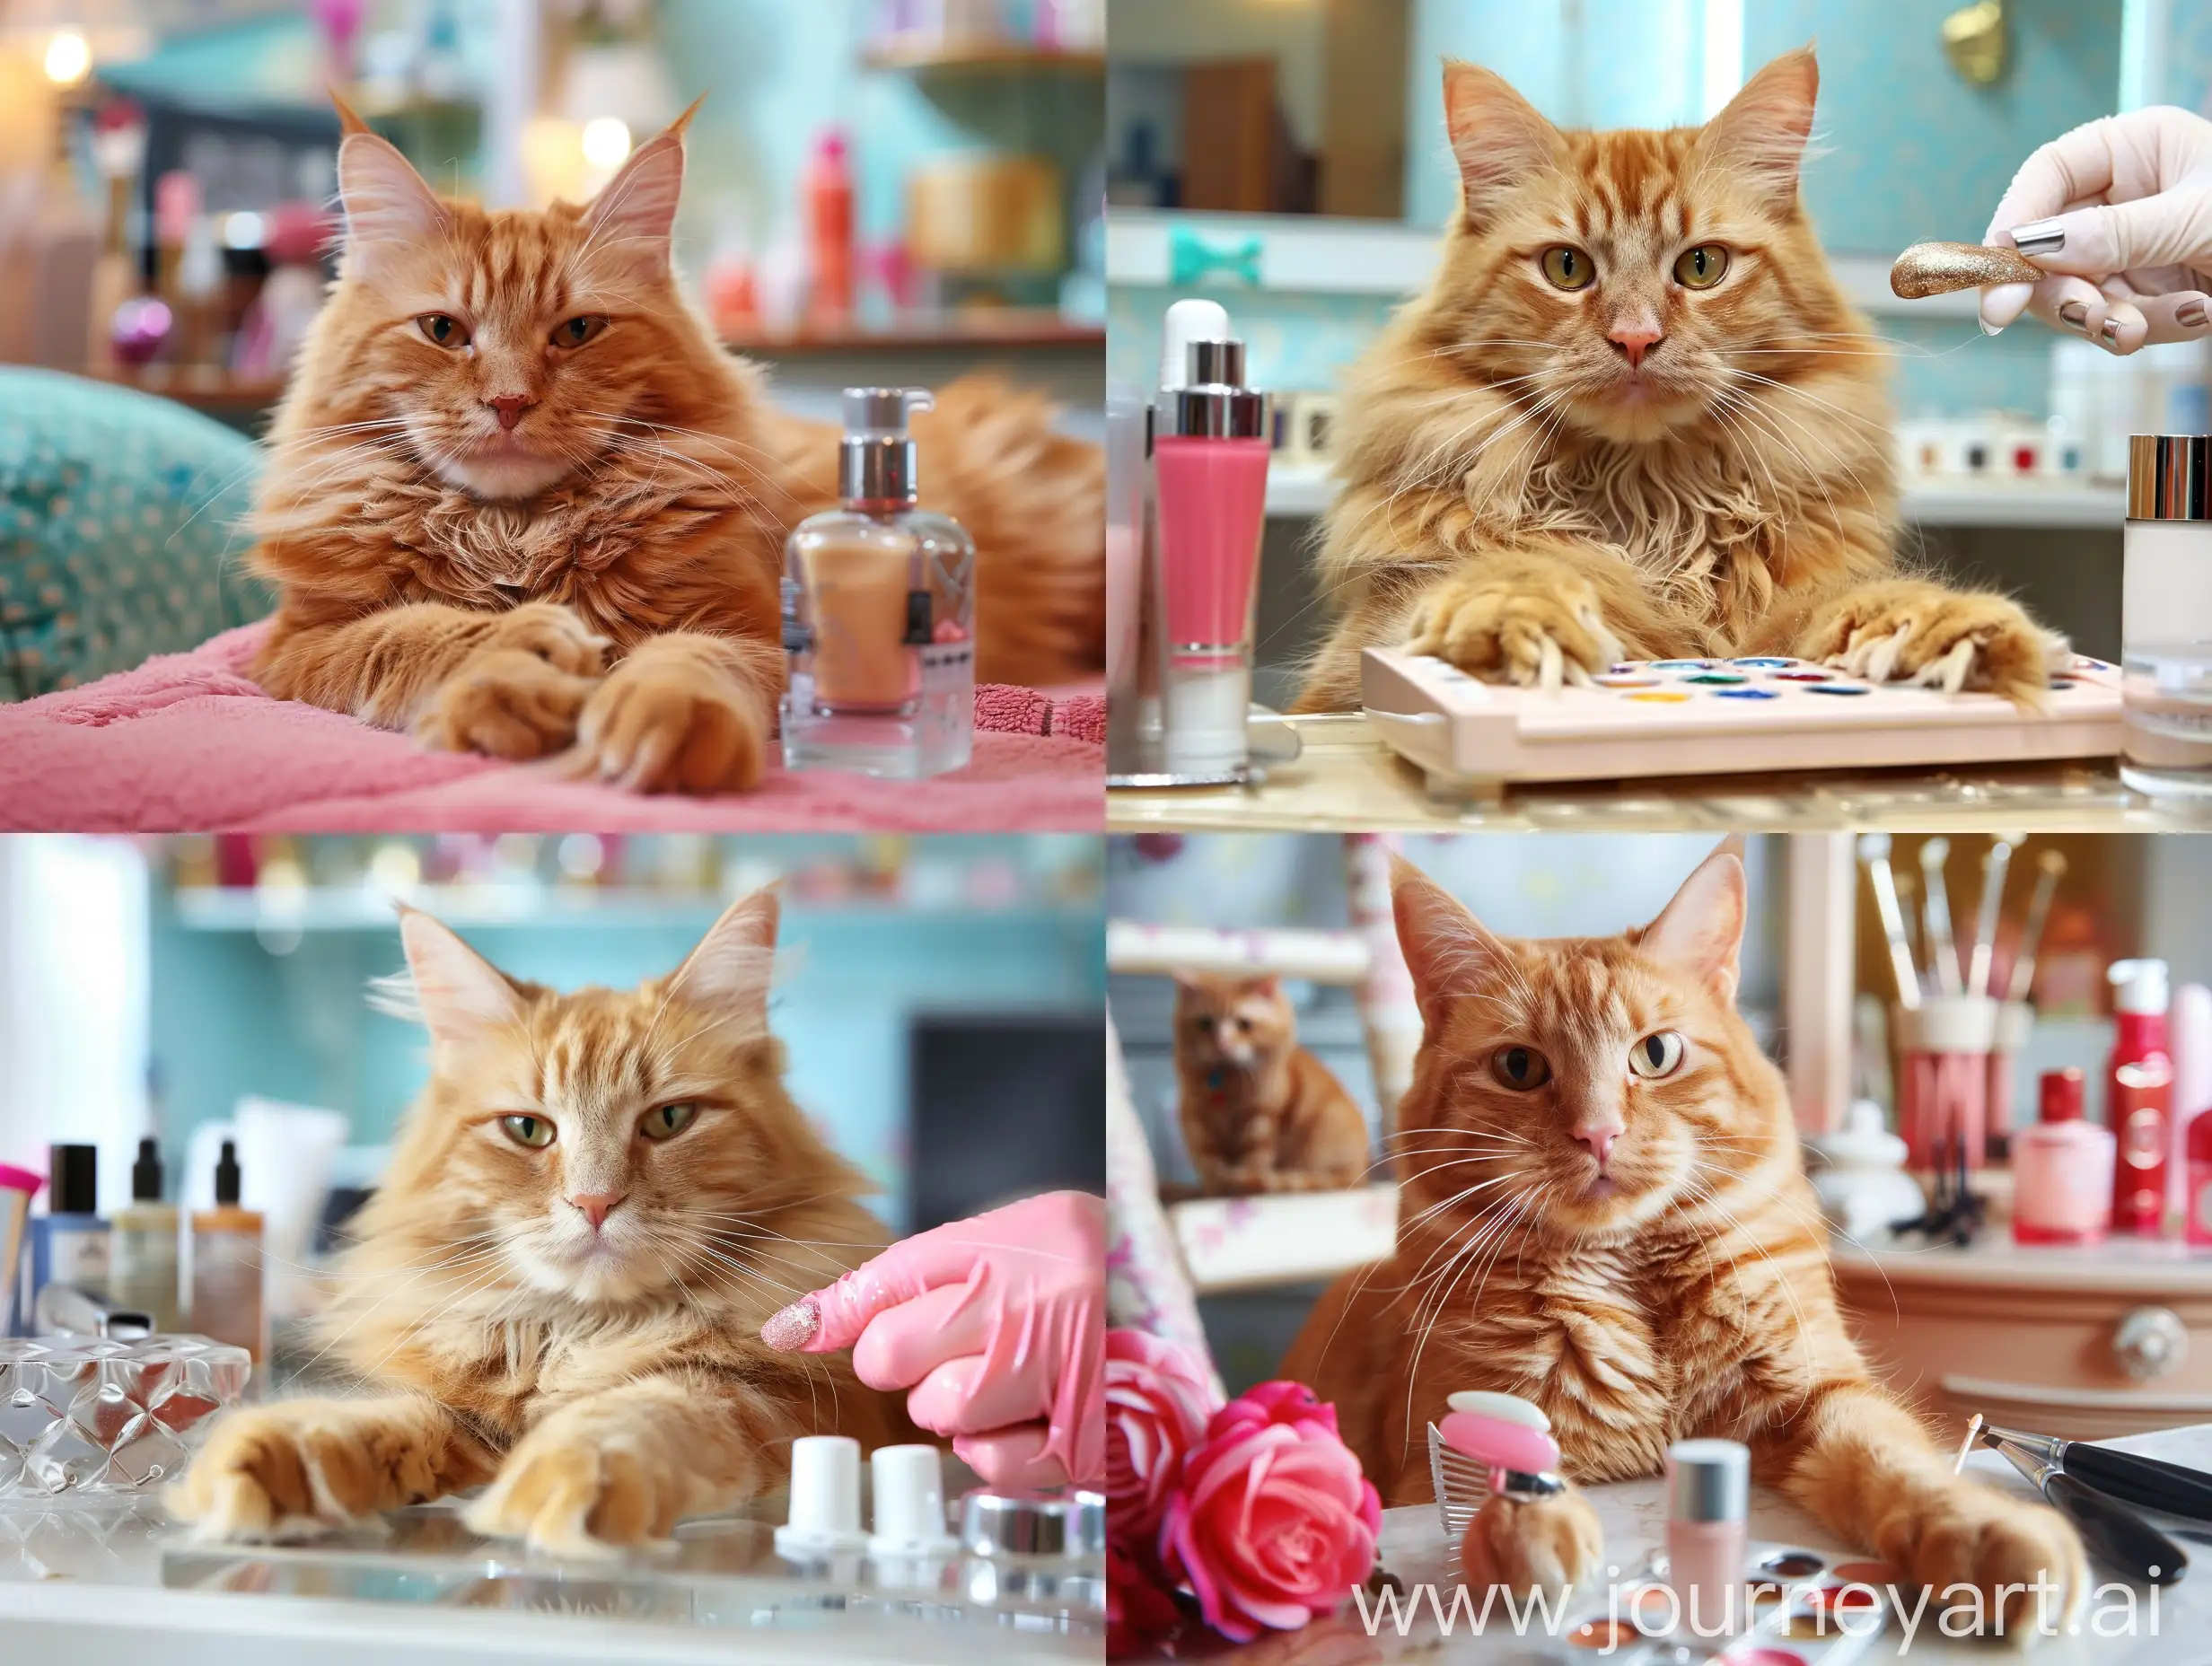 Elegant-Ginger-Cat-Receives-Glamorous-Manicure-at-Luxury-Beauty-Salon